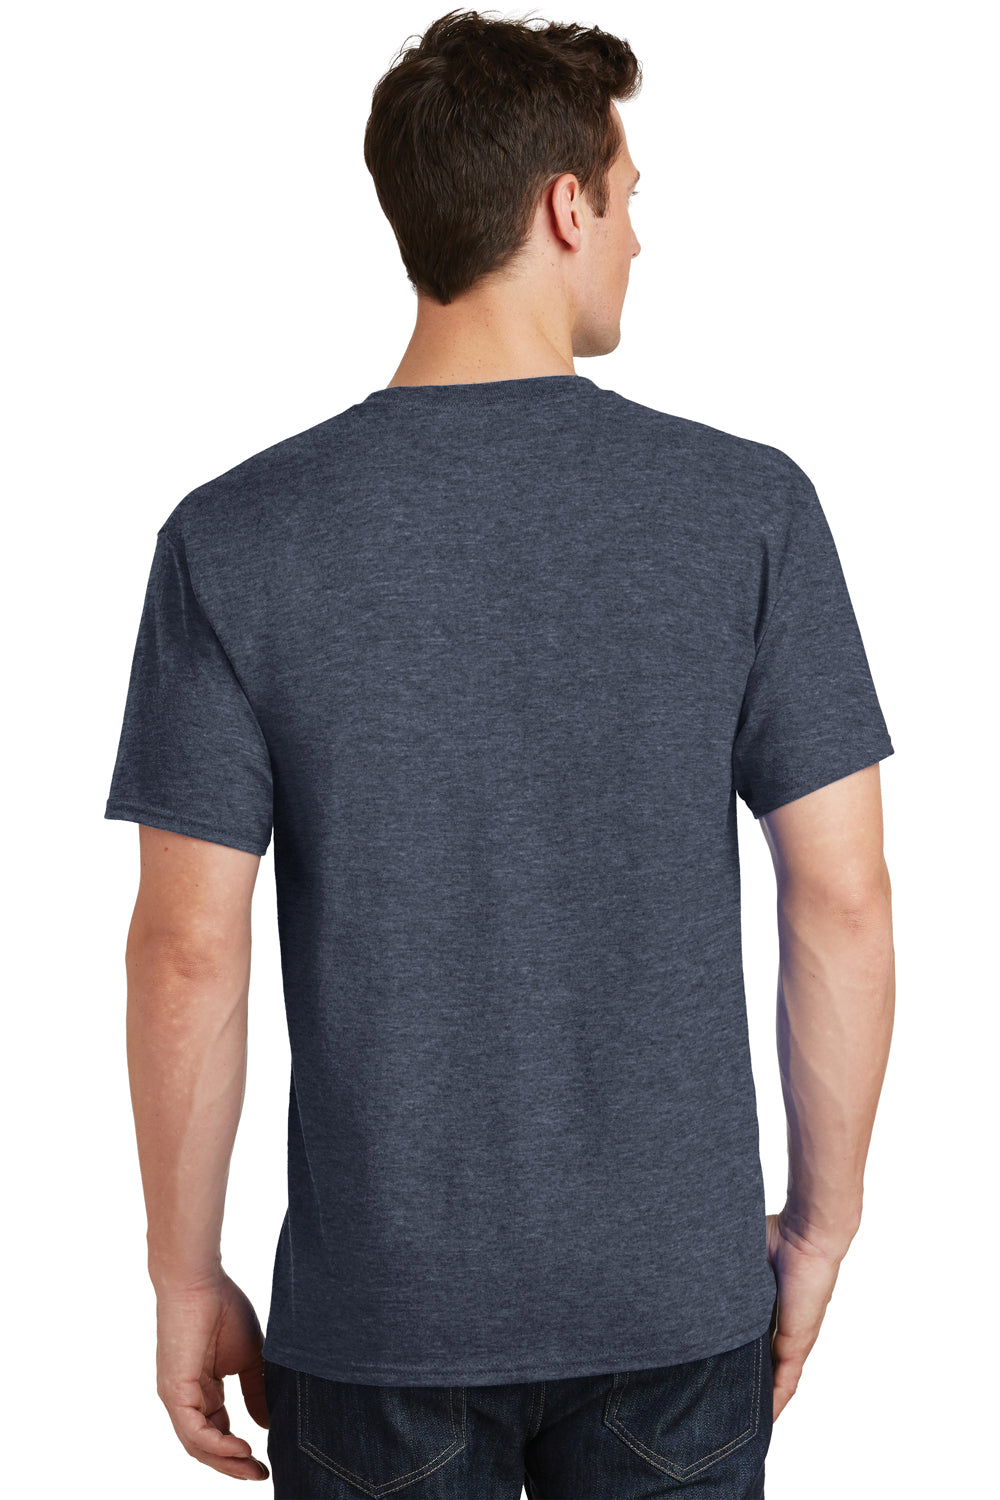 Port & Company PC54 Mens Core Short Sleeve Crewneck T-Shirt Heather Navy Blue Back